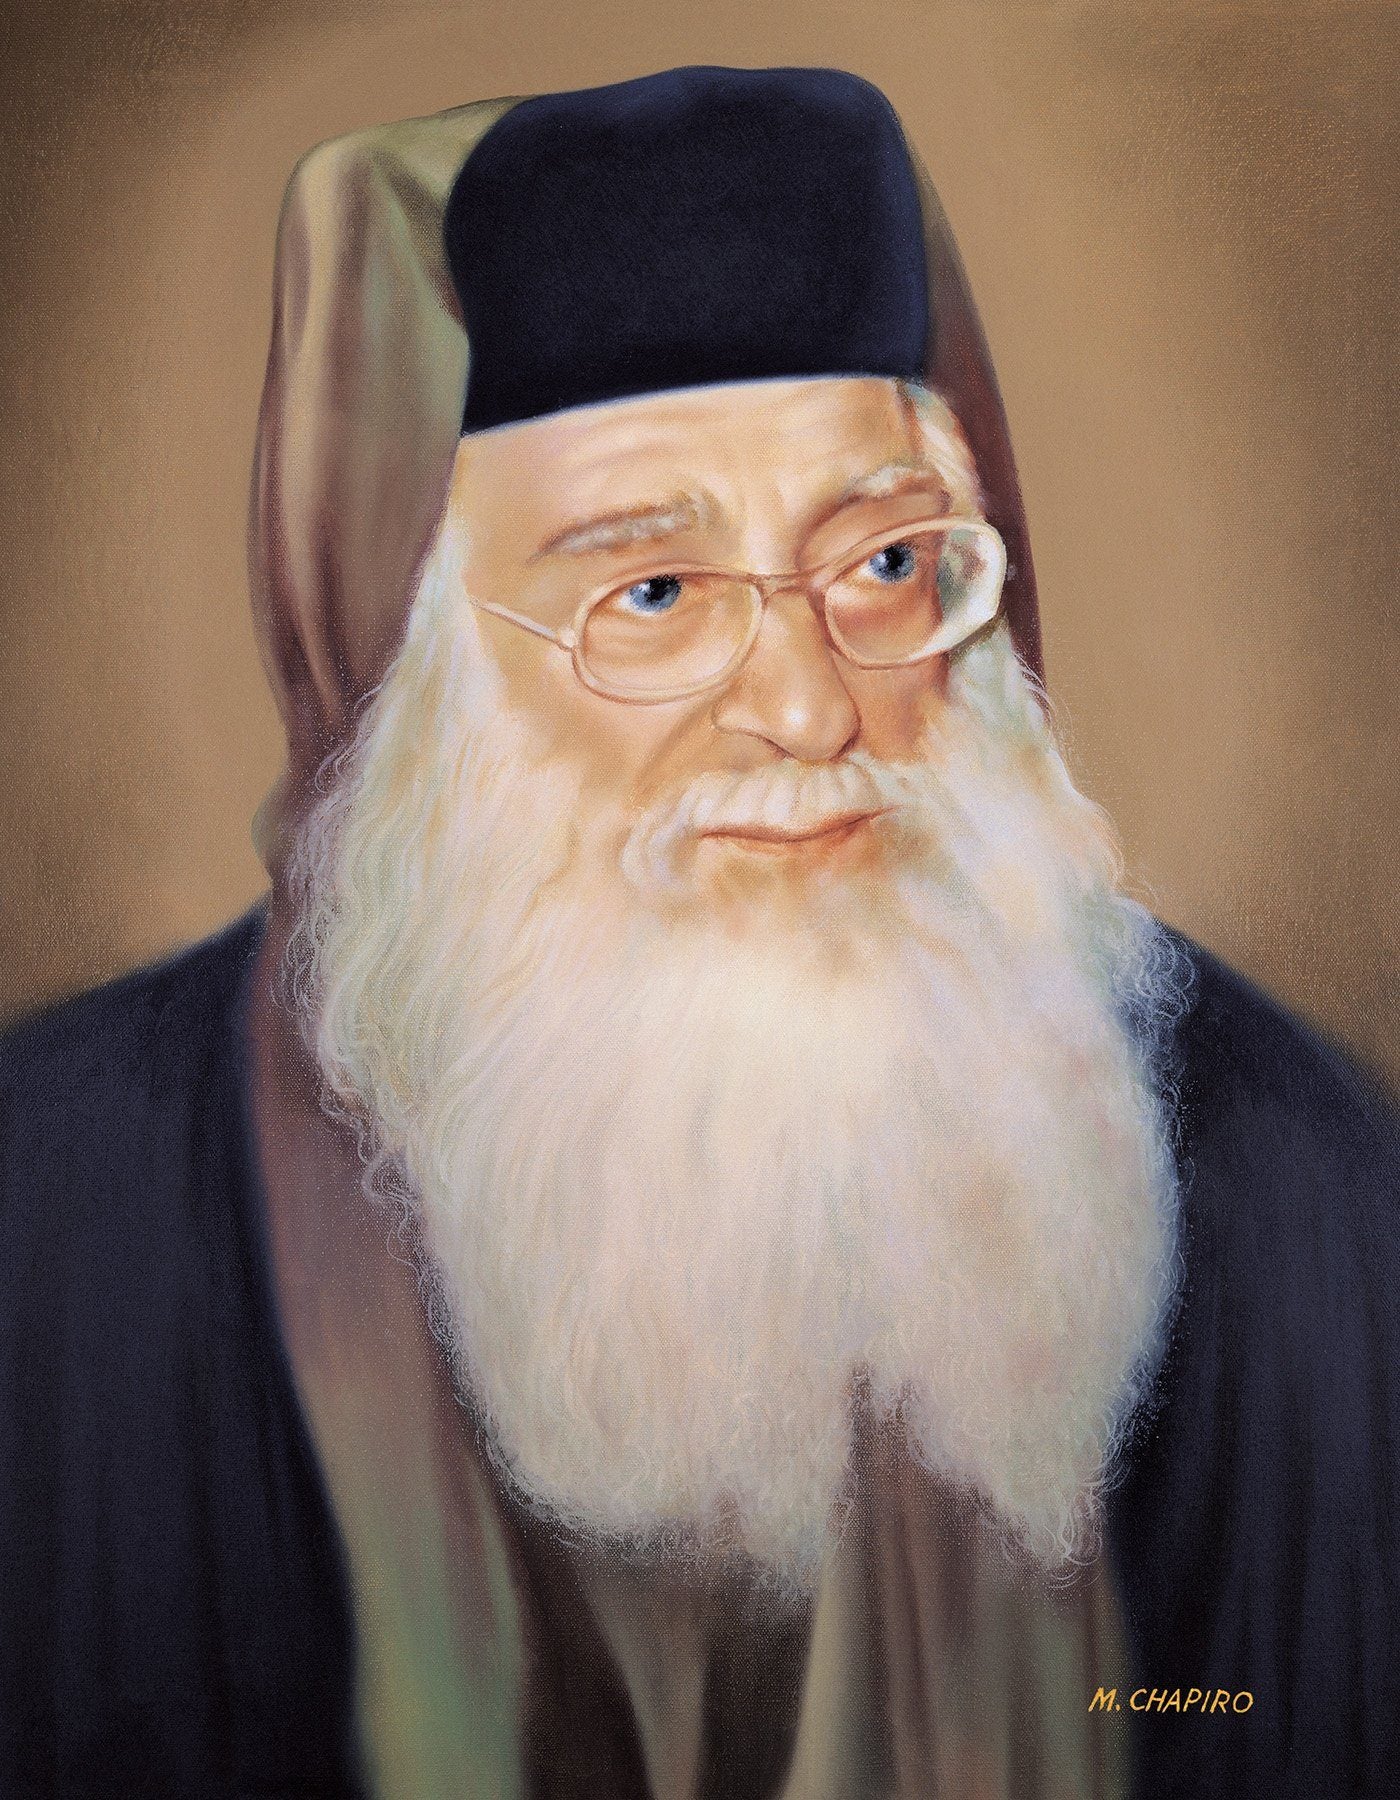 Rabbi Meir Abouhassira/ By Mikhail Chapiro Giclee Print AHAVART 